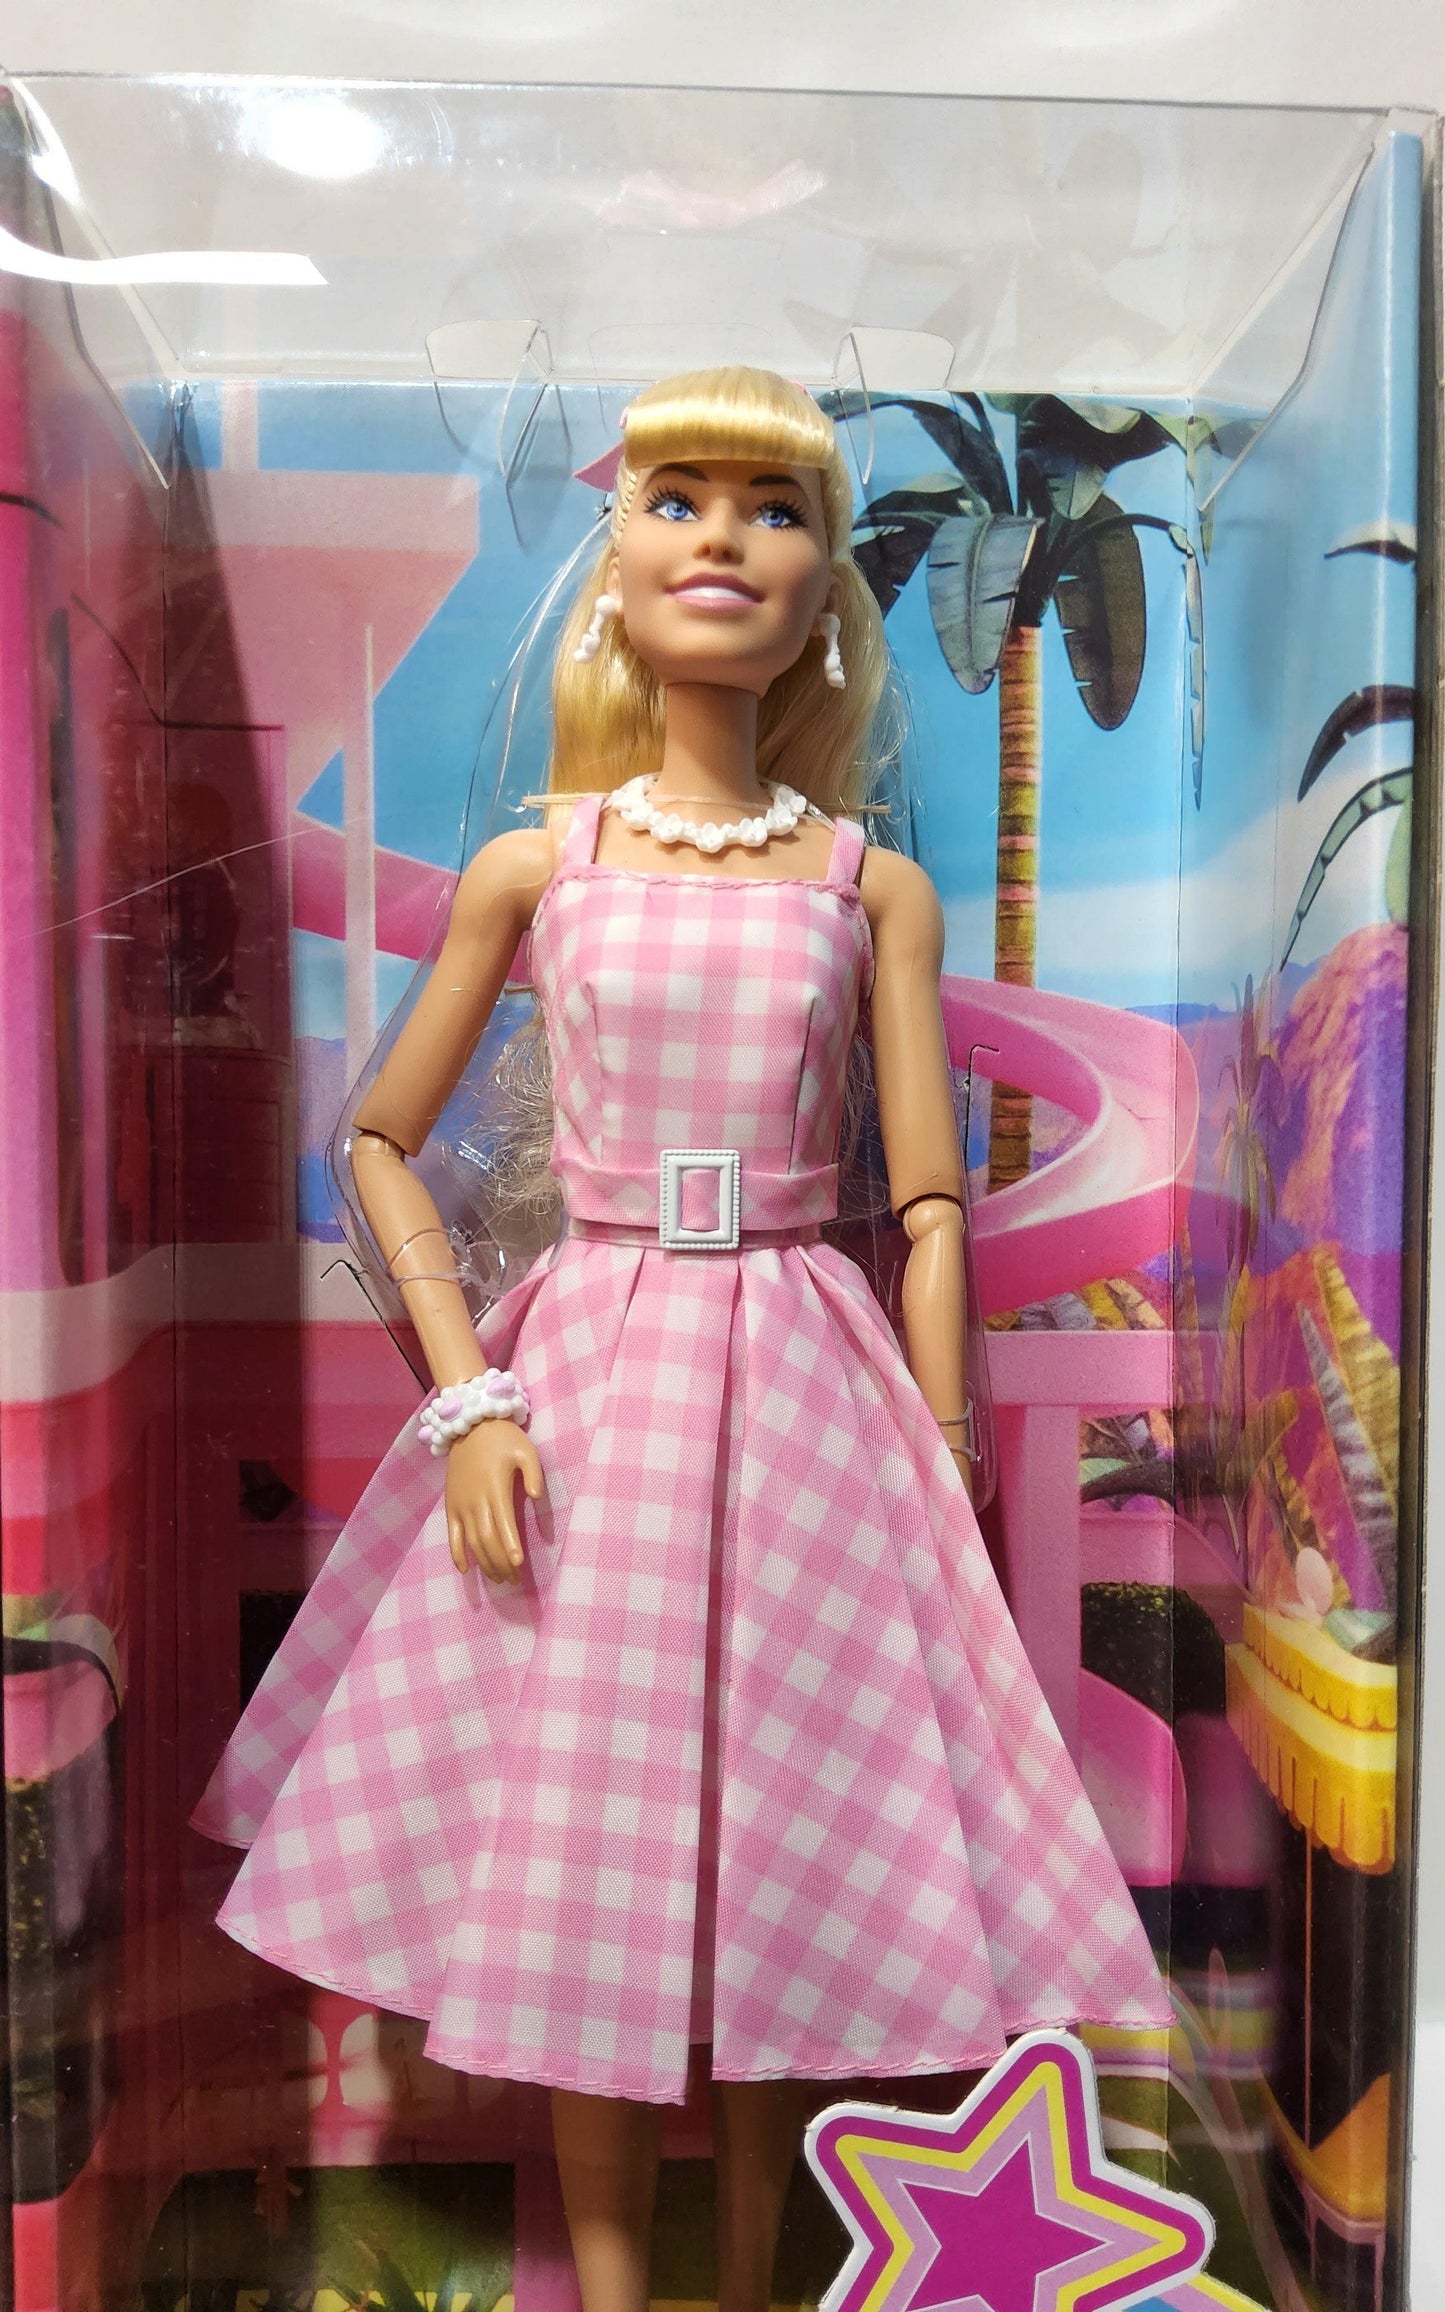 Mattel Barbie The Movie Barbie Doll 12" Figure in Pink & White Dress & Accessories - Logan's Toy Chest